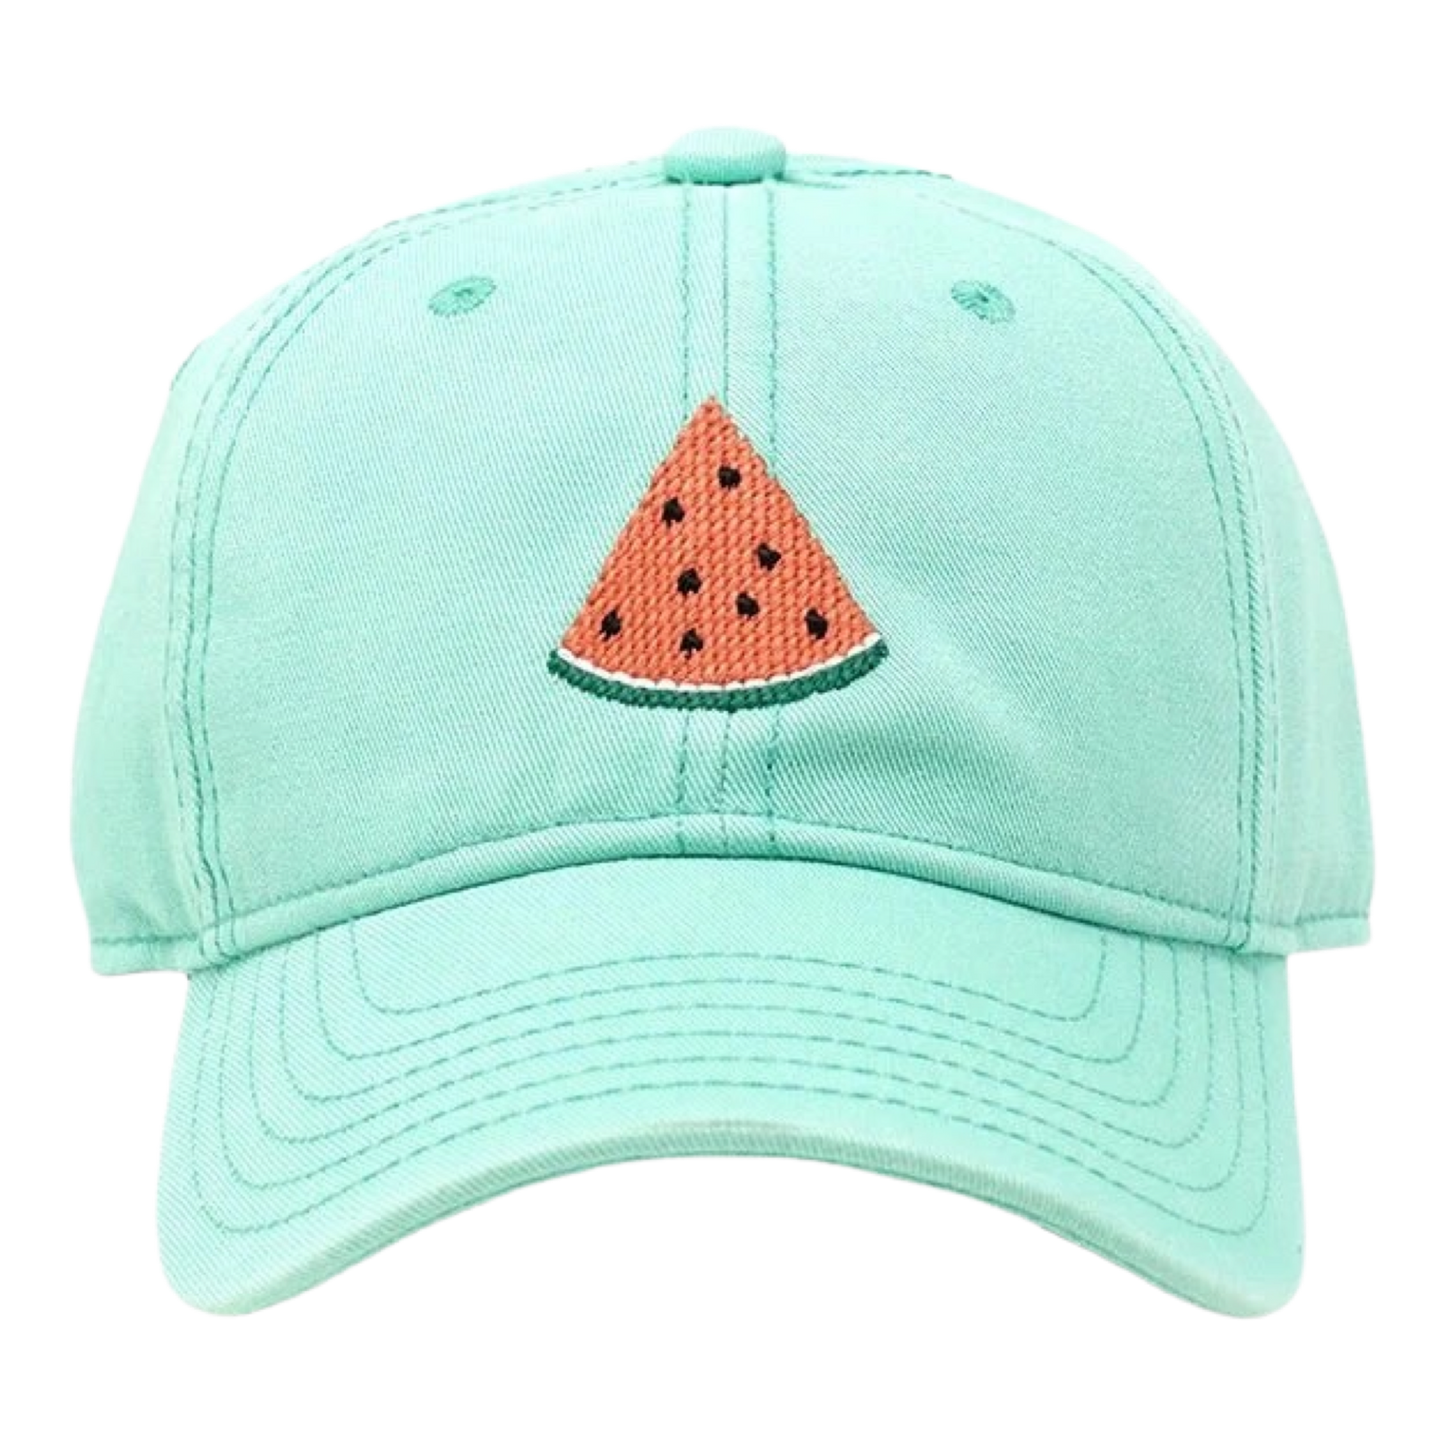 HL Hat - Watermelon